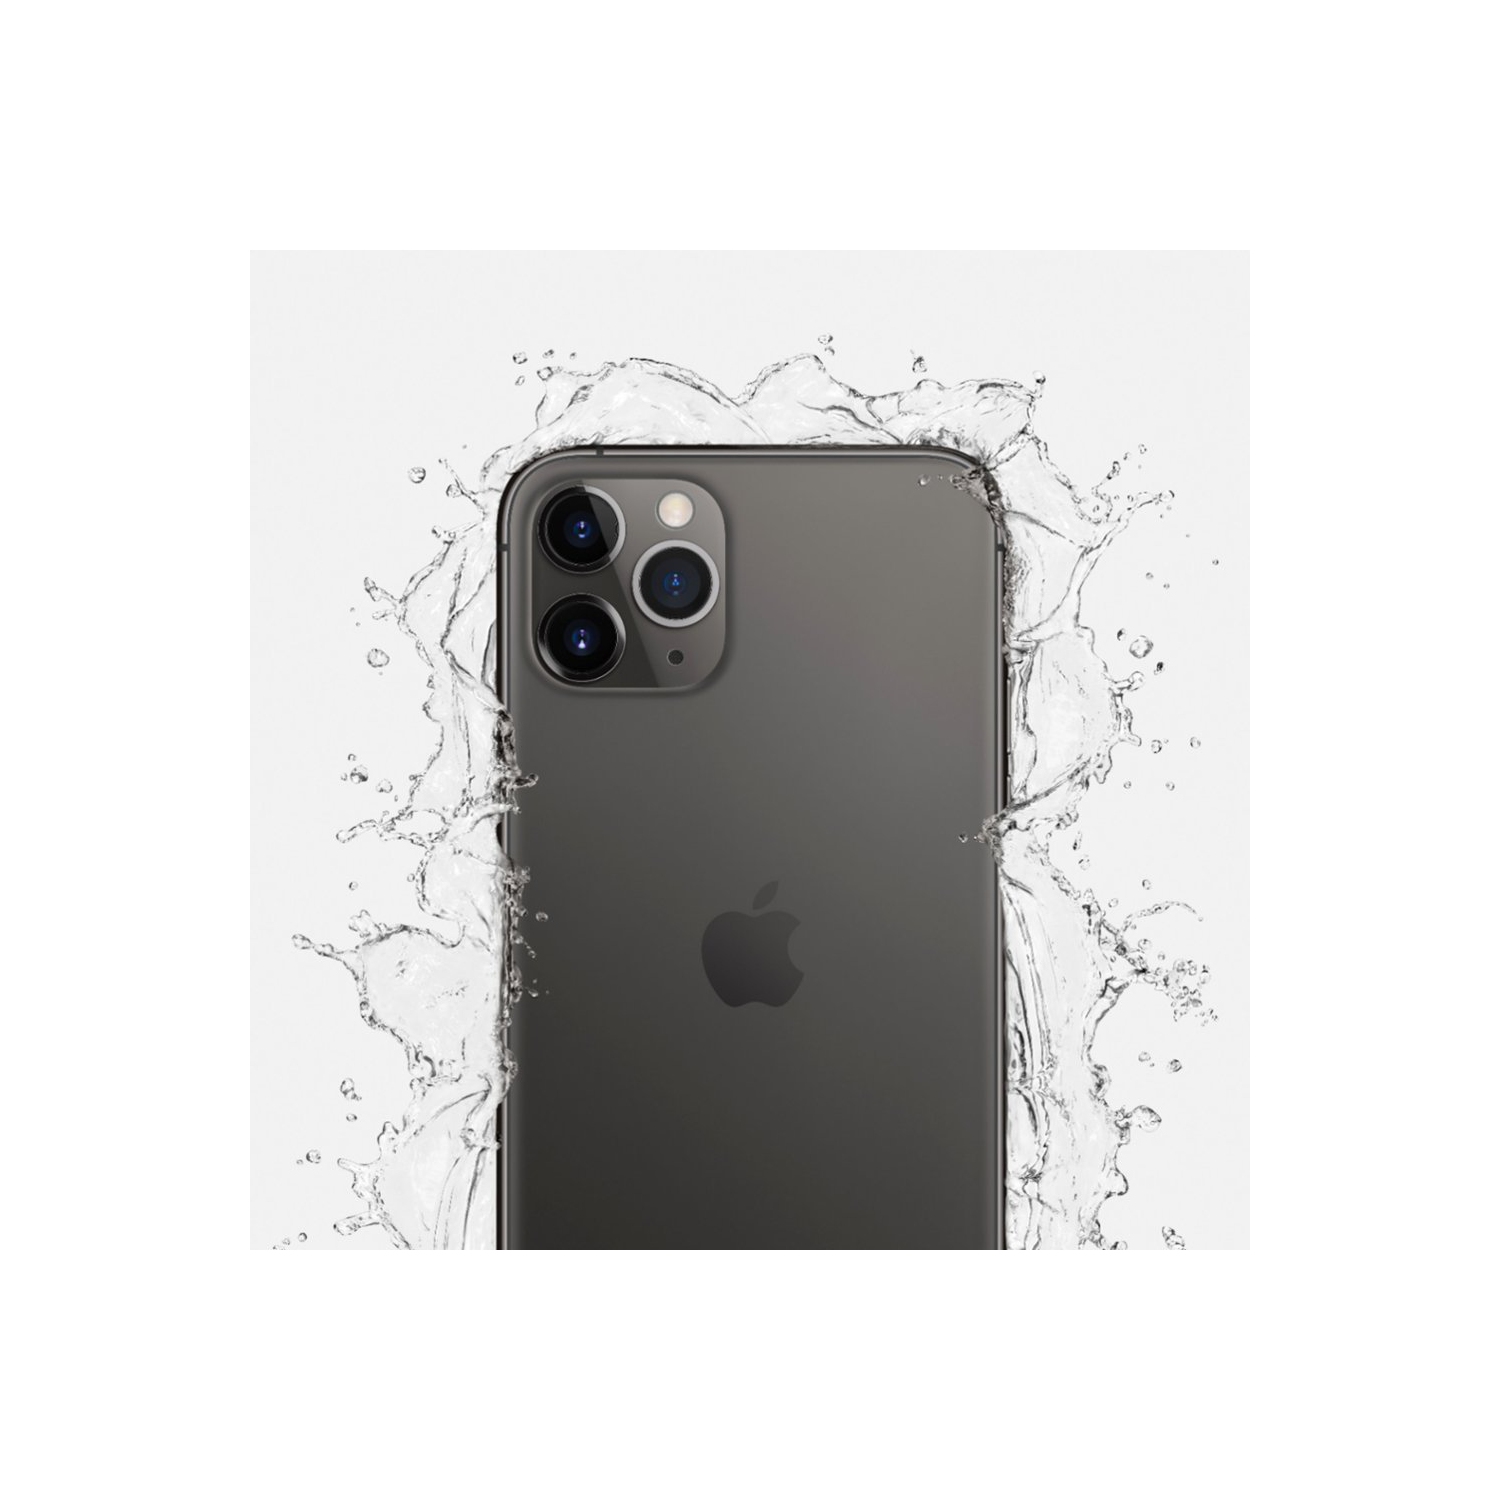 Refurbished (Excellent) - Apple iPhone 11 Pro Max 64GB Smartphone